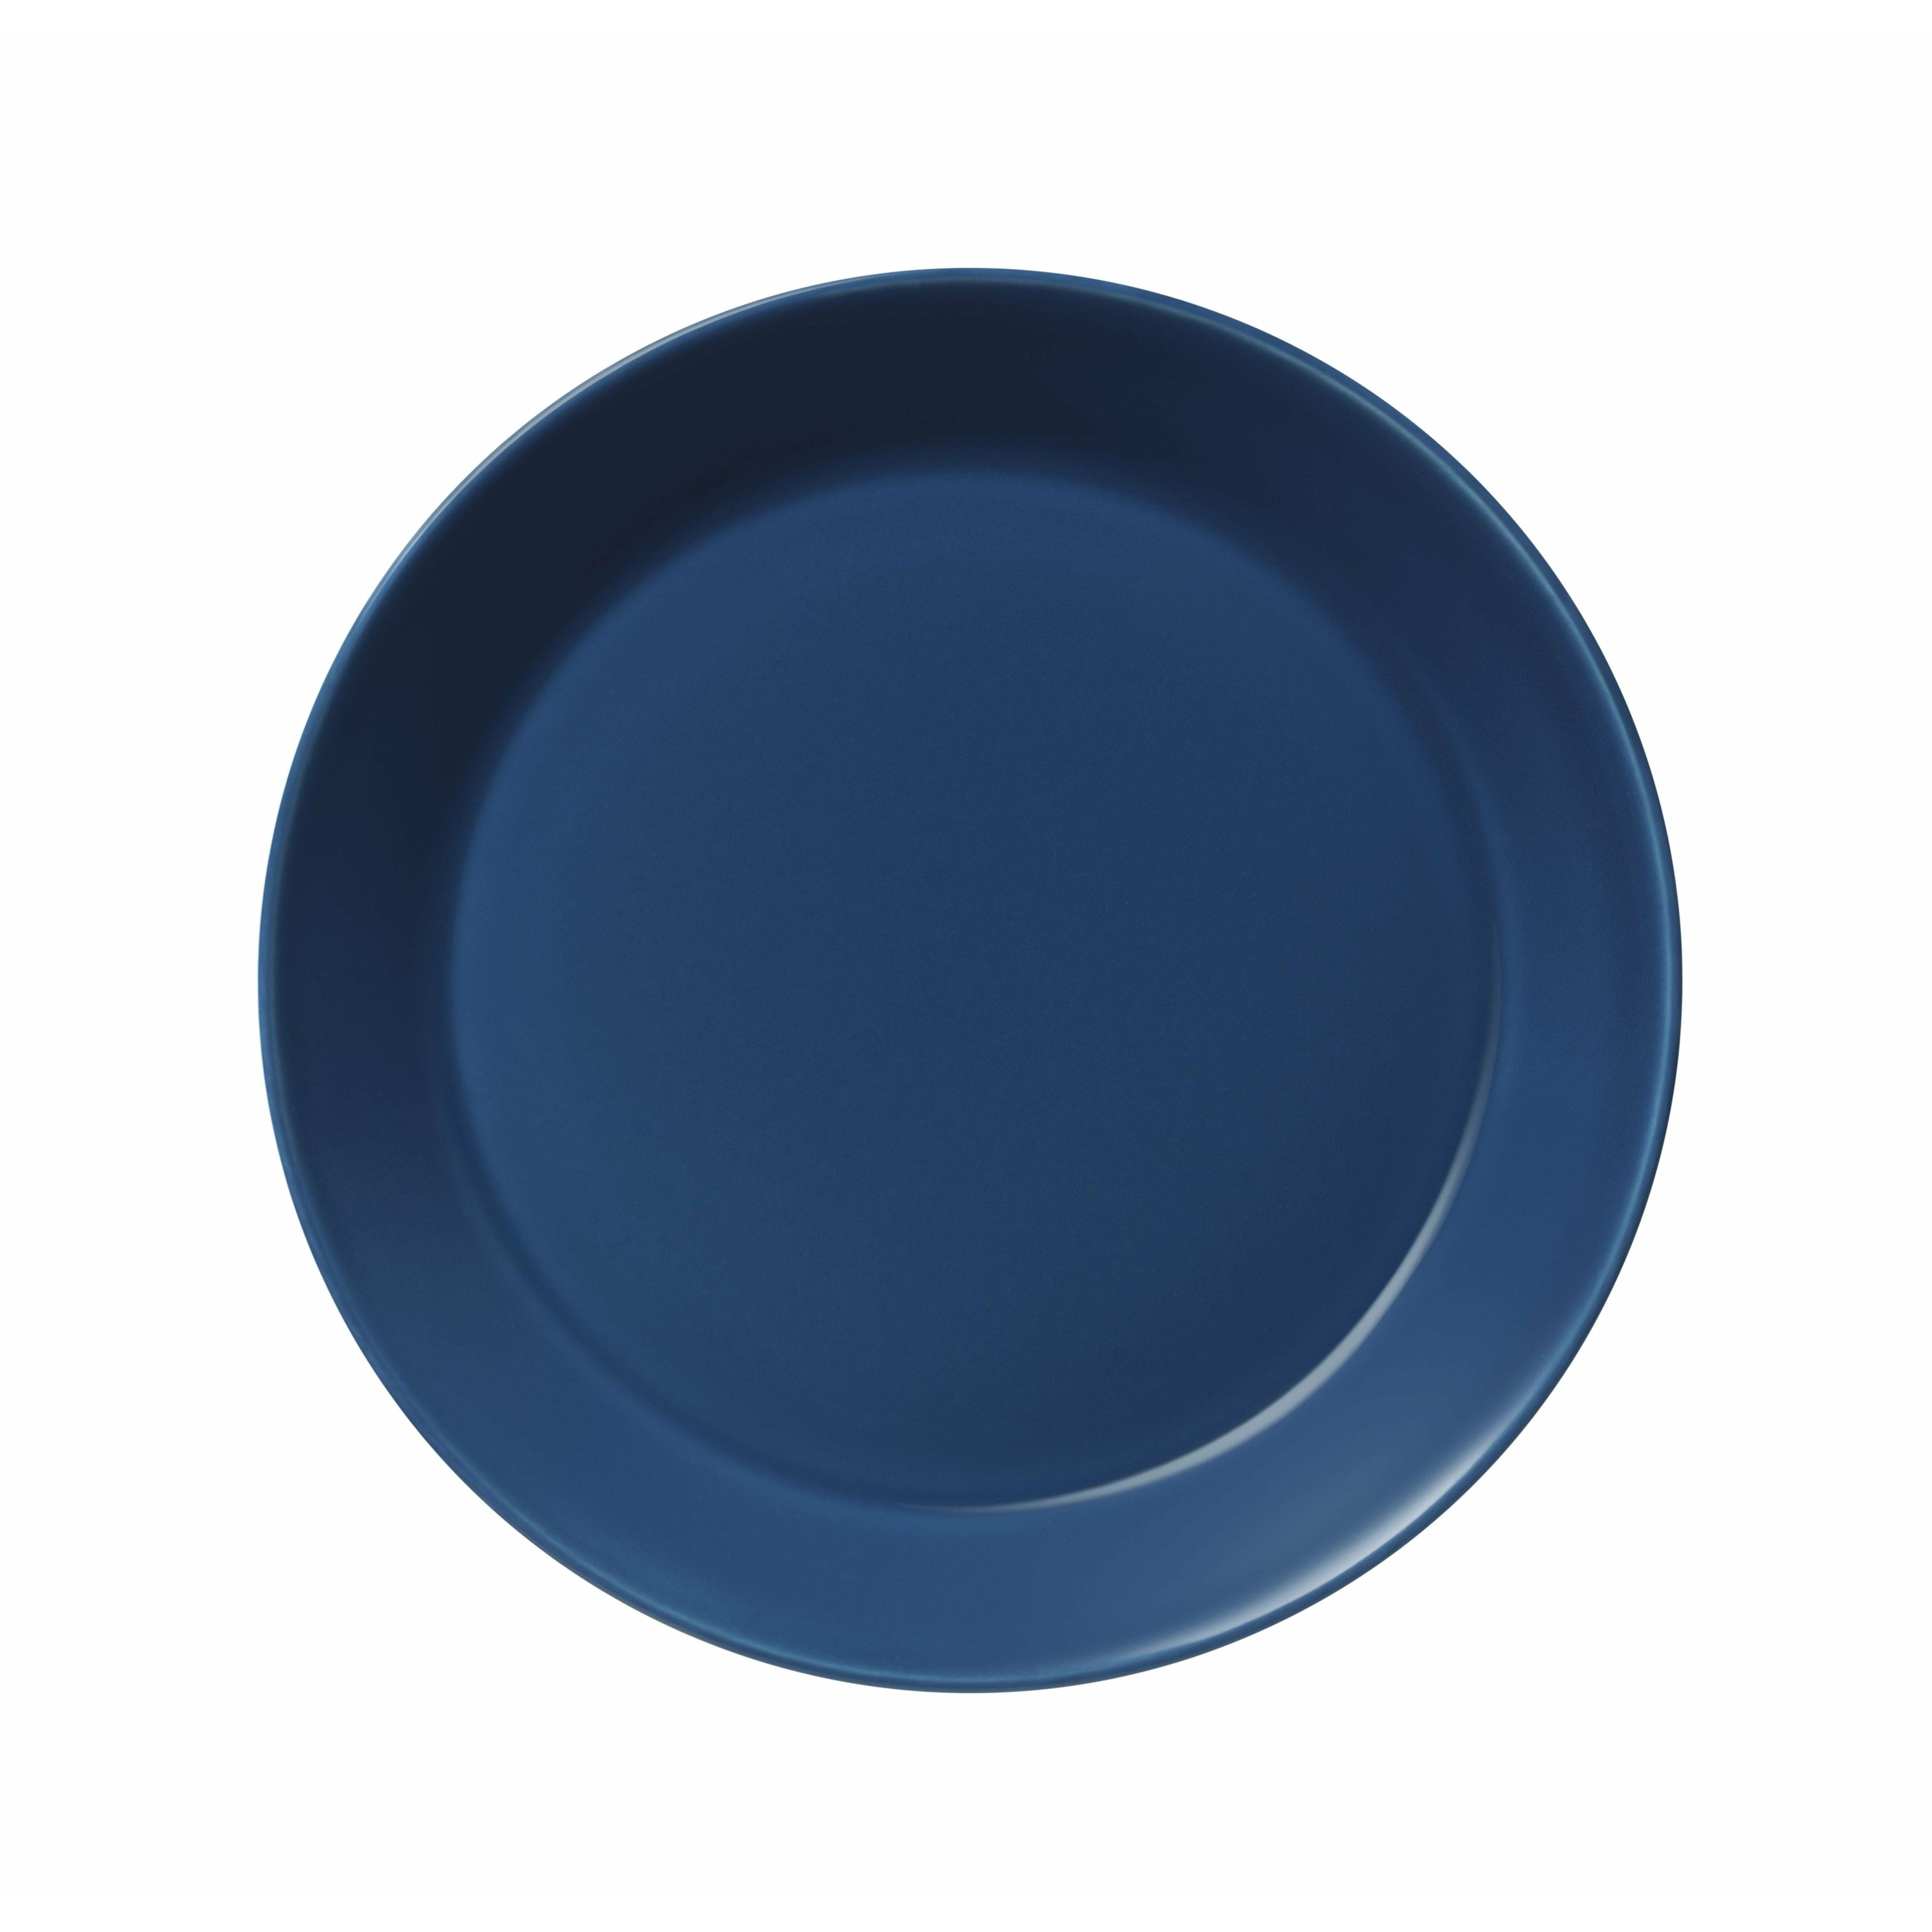 Iittala Plaque teema 21cm, bleu vintage